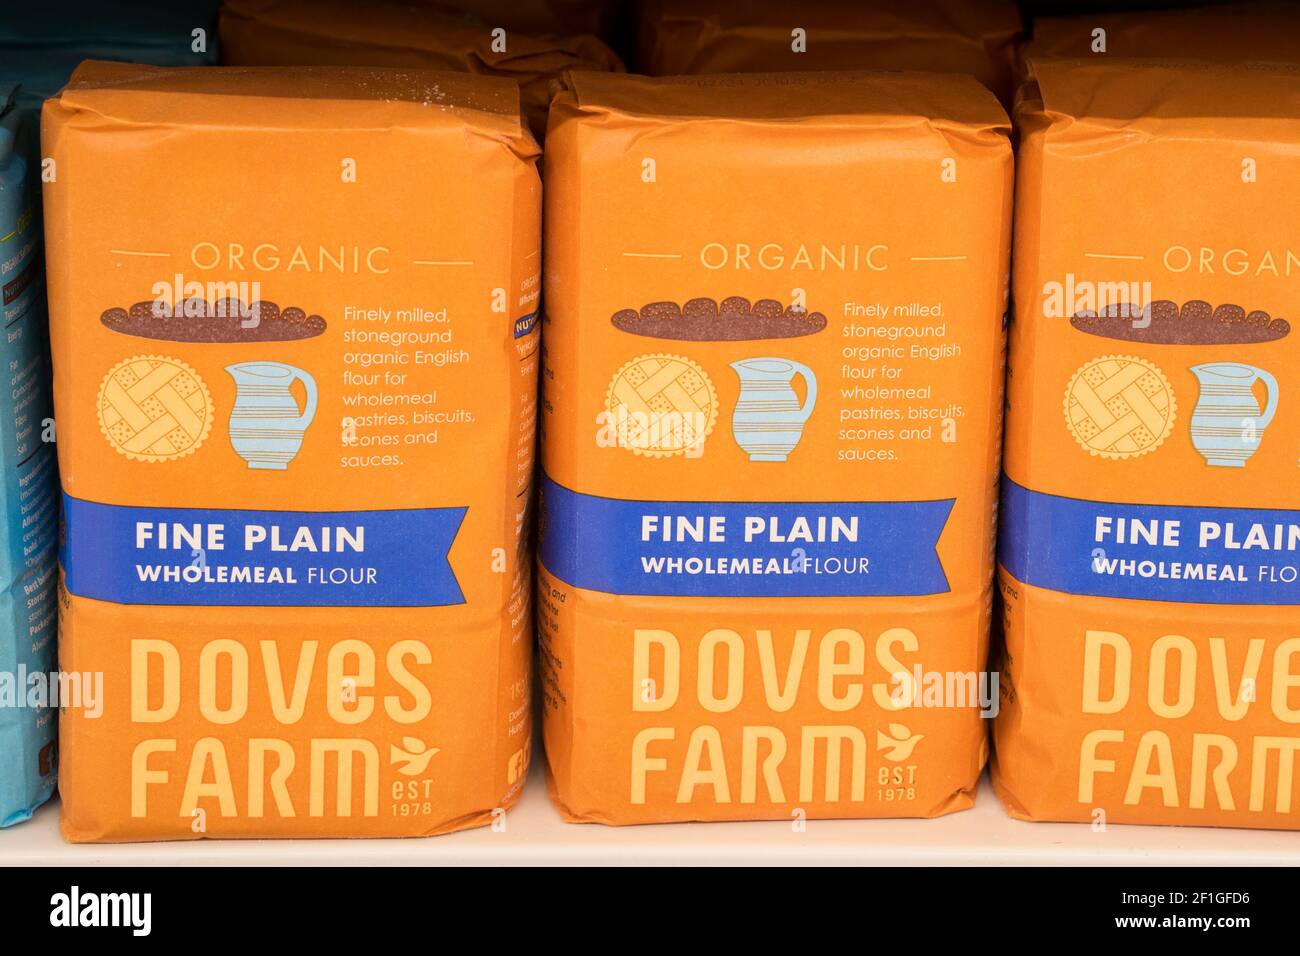 Doves Farm Organic Wholemeal Flour Stock Photo